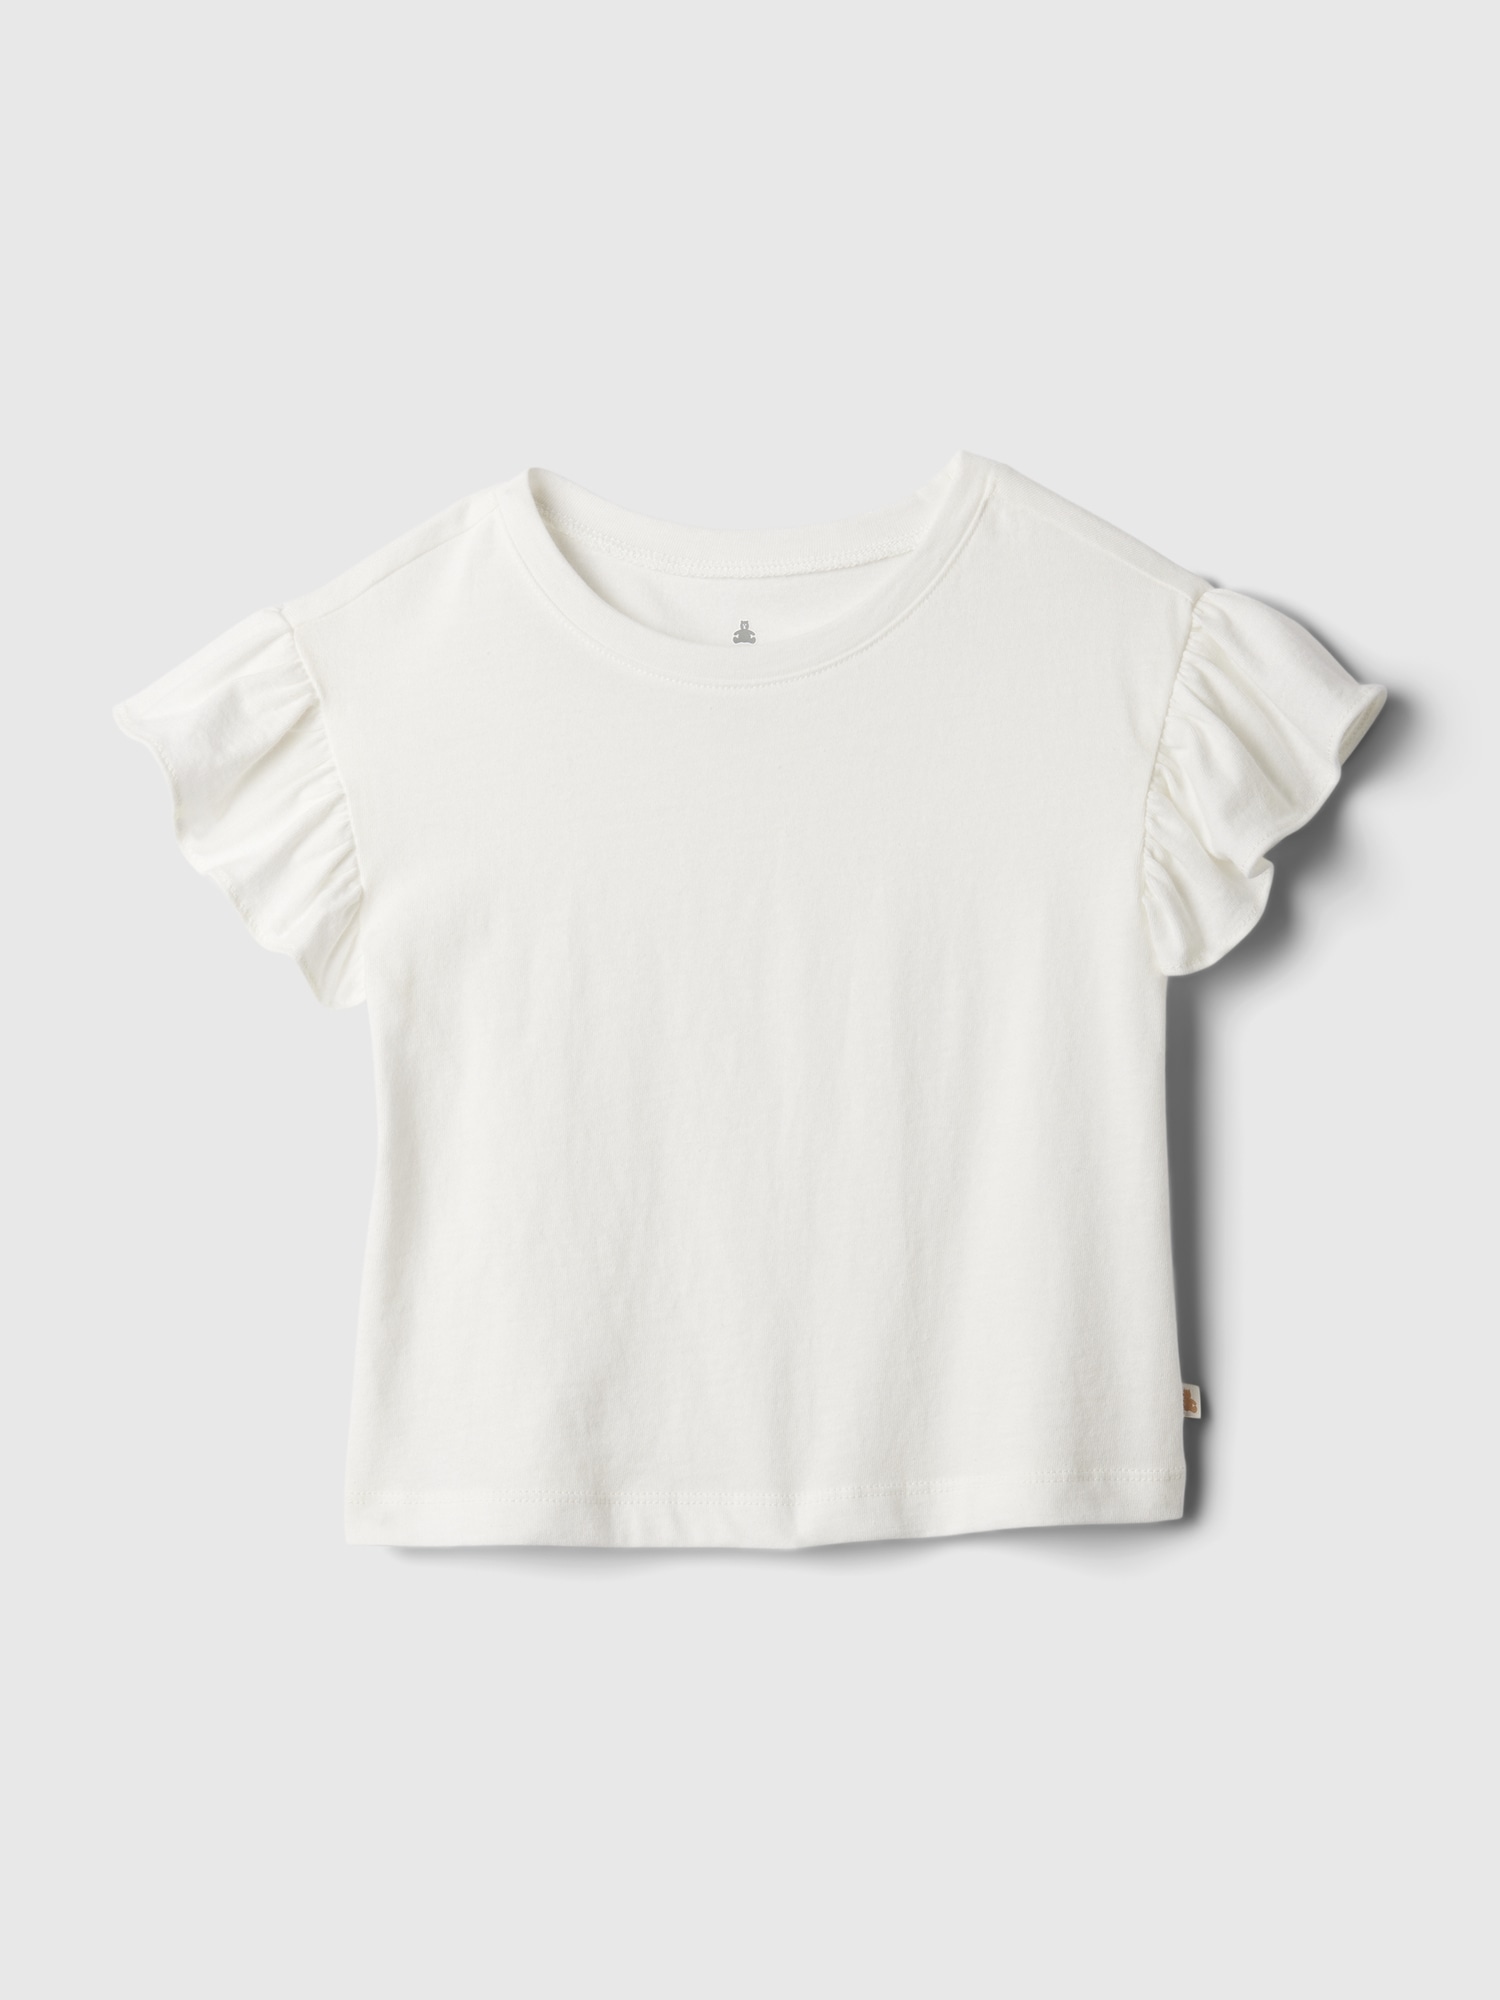 babyGap Mix and Match Print T-Shirt